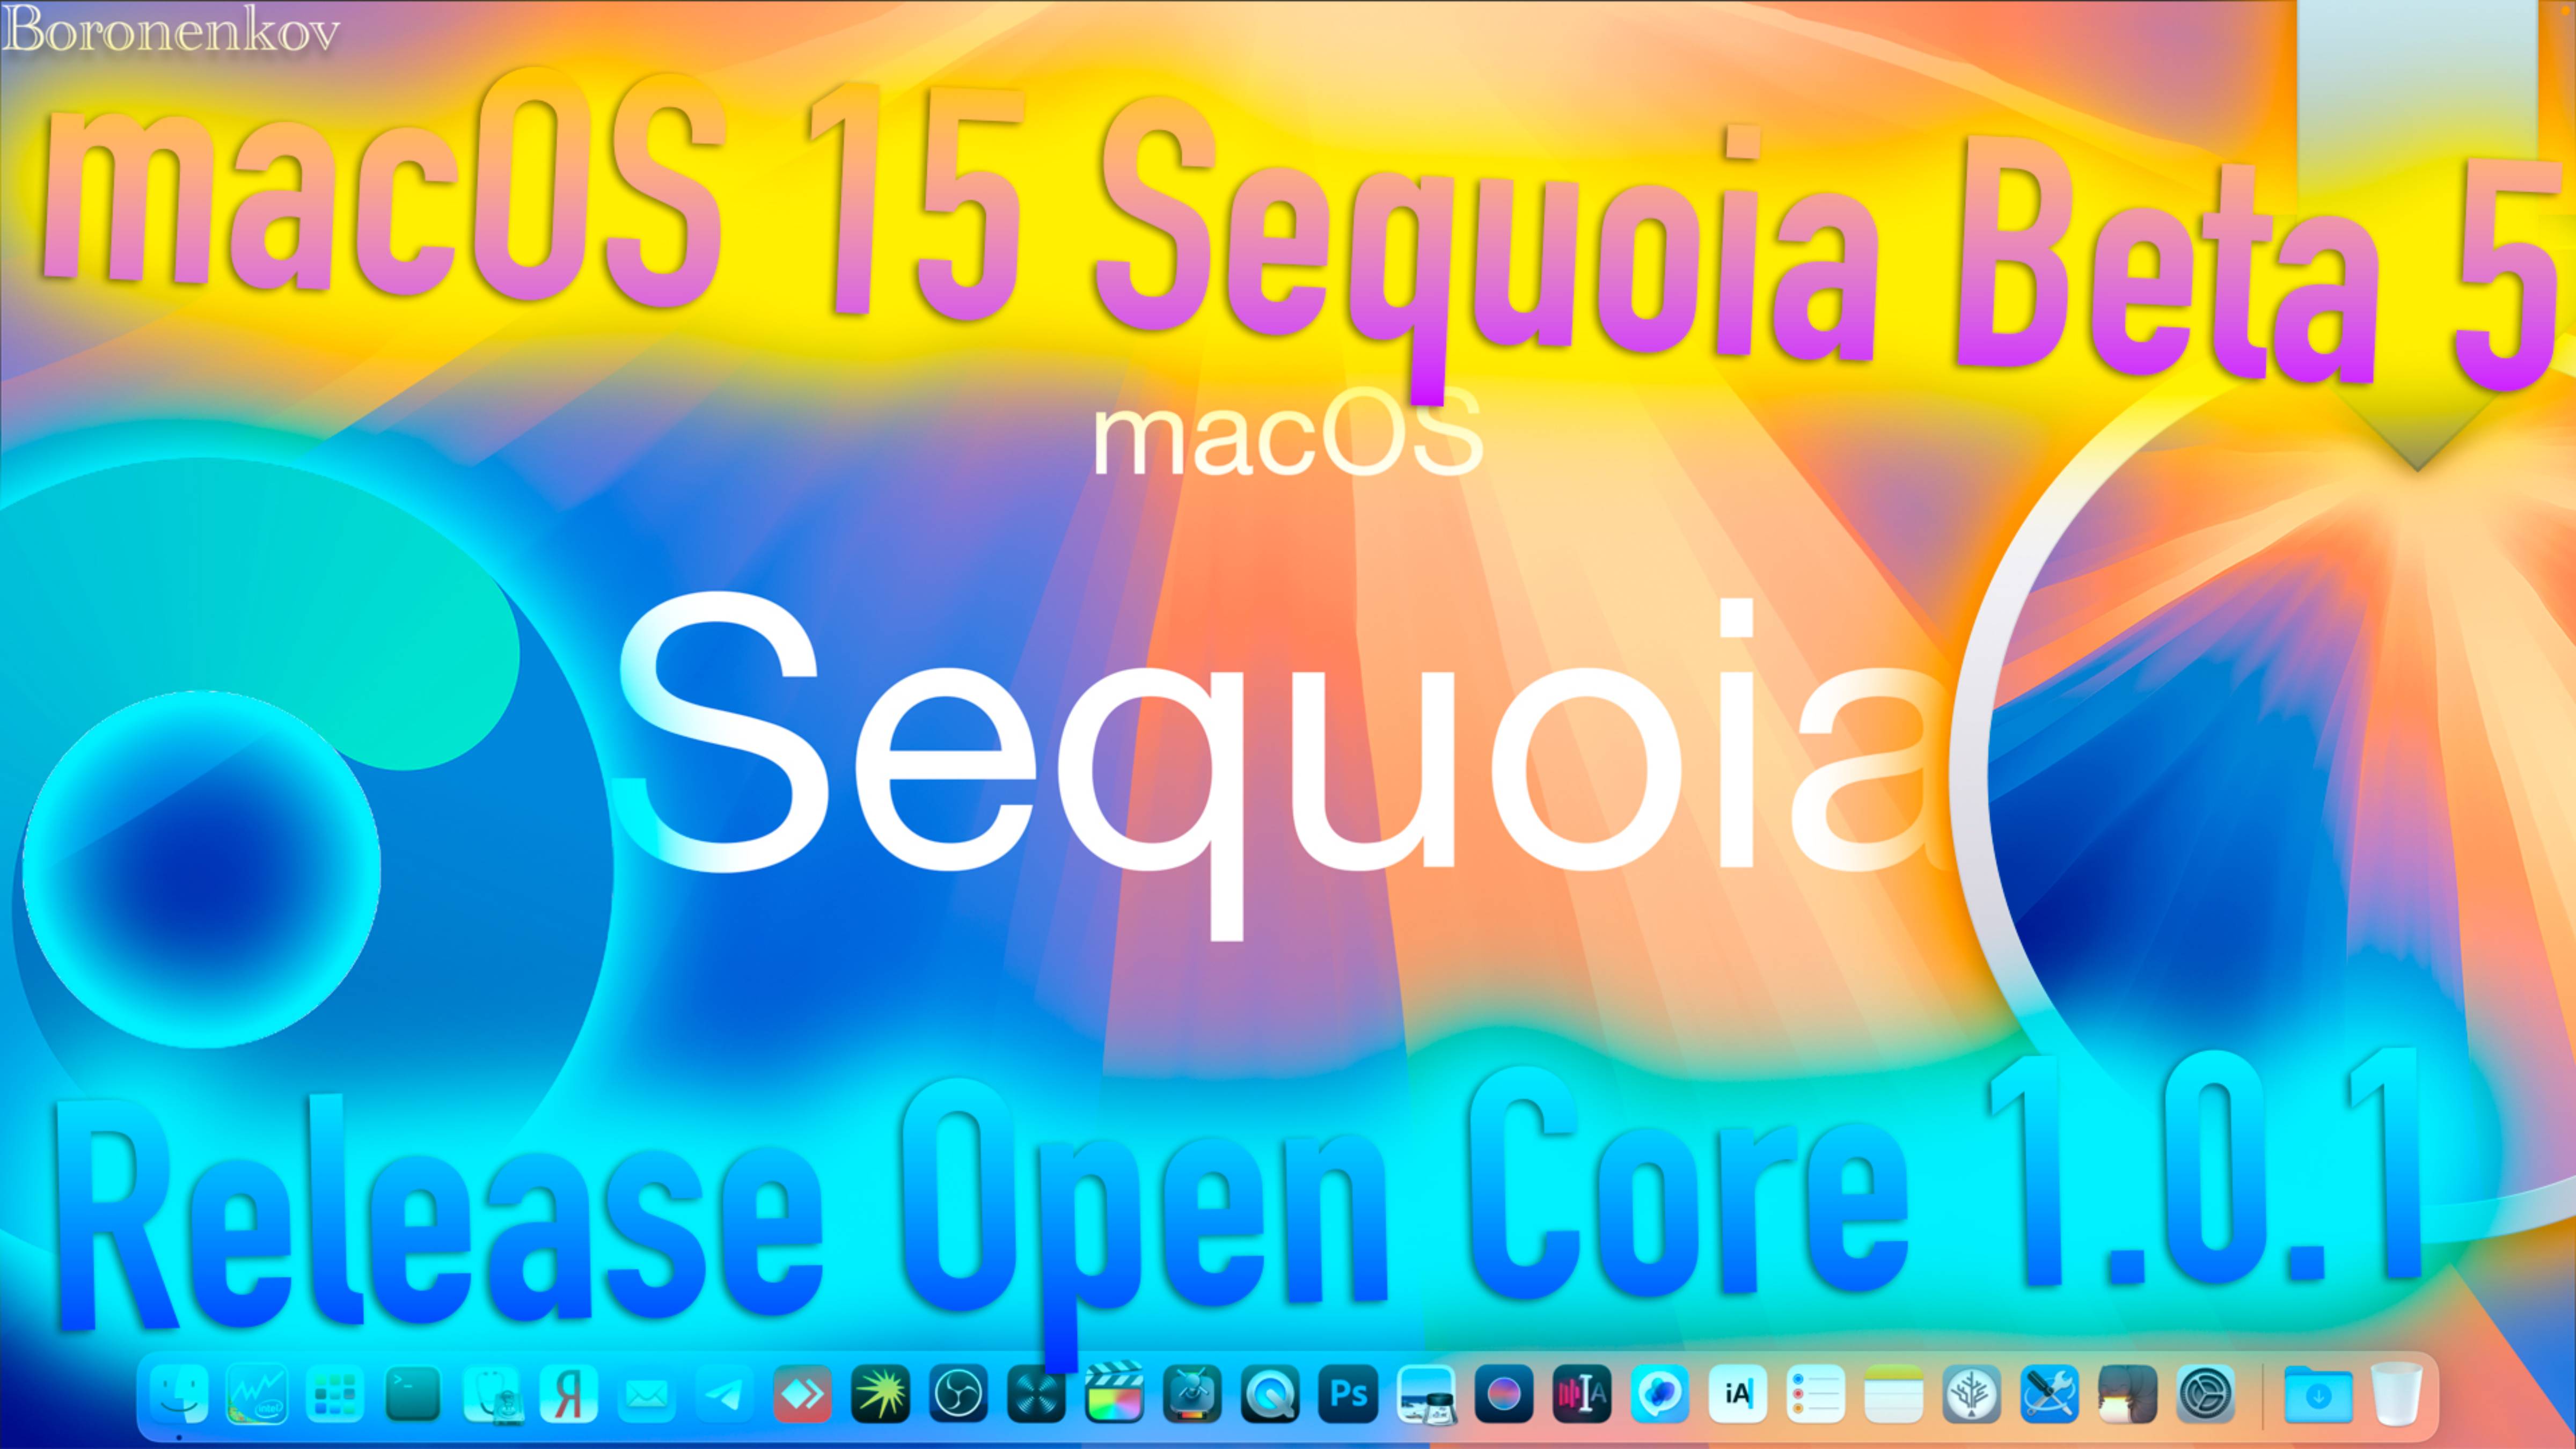 RELEASE OPENCORE 1.0.1 | MACOS 15 SEQUOIA BETA 5! HACKINTOSH! - ALEXEY BORONENKOV | 4K